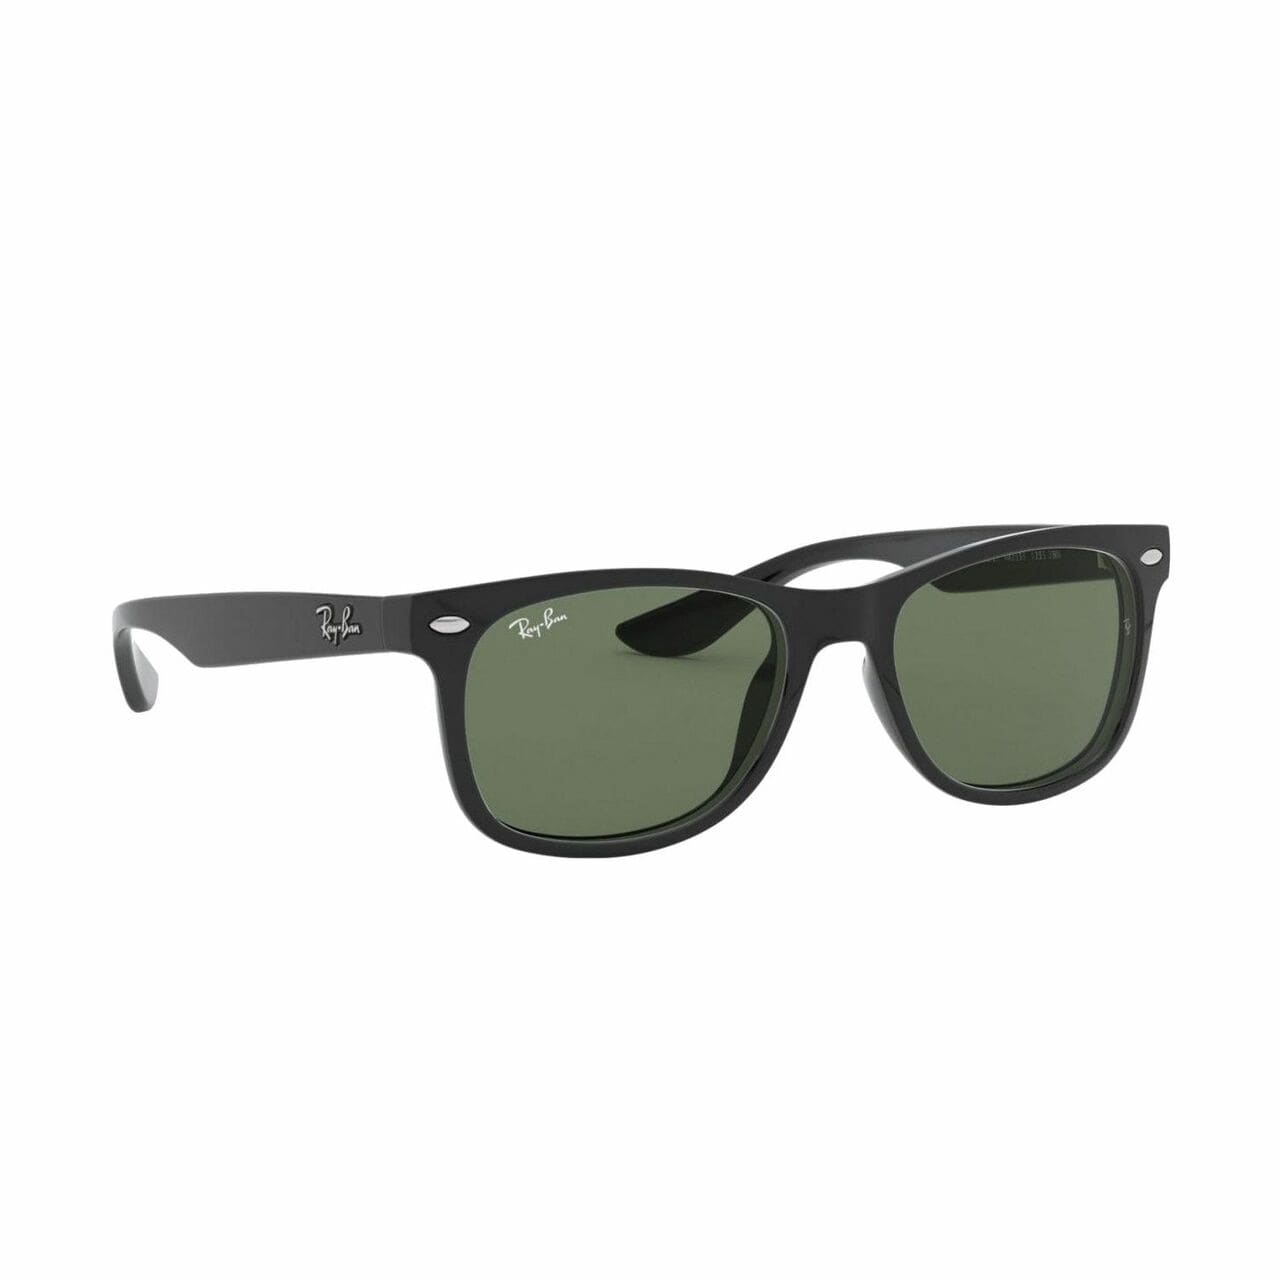 Ray-Ban RJ9052S-100/71 New Wayfarer Junior Black Square Green Classic Lens Sunglasses 805289432012